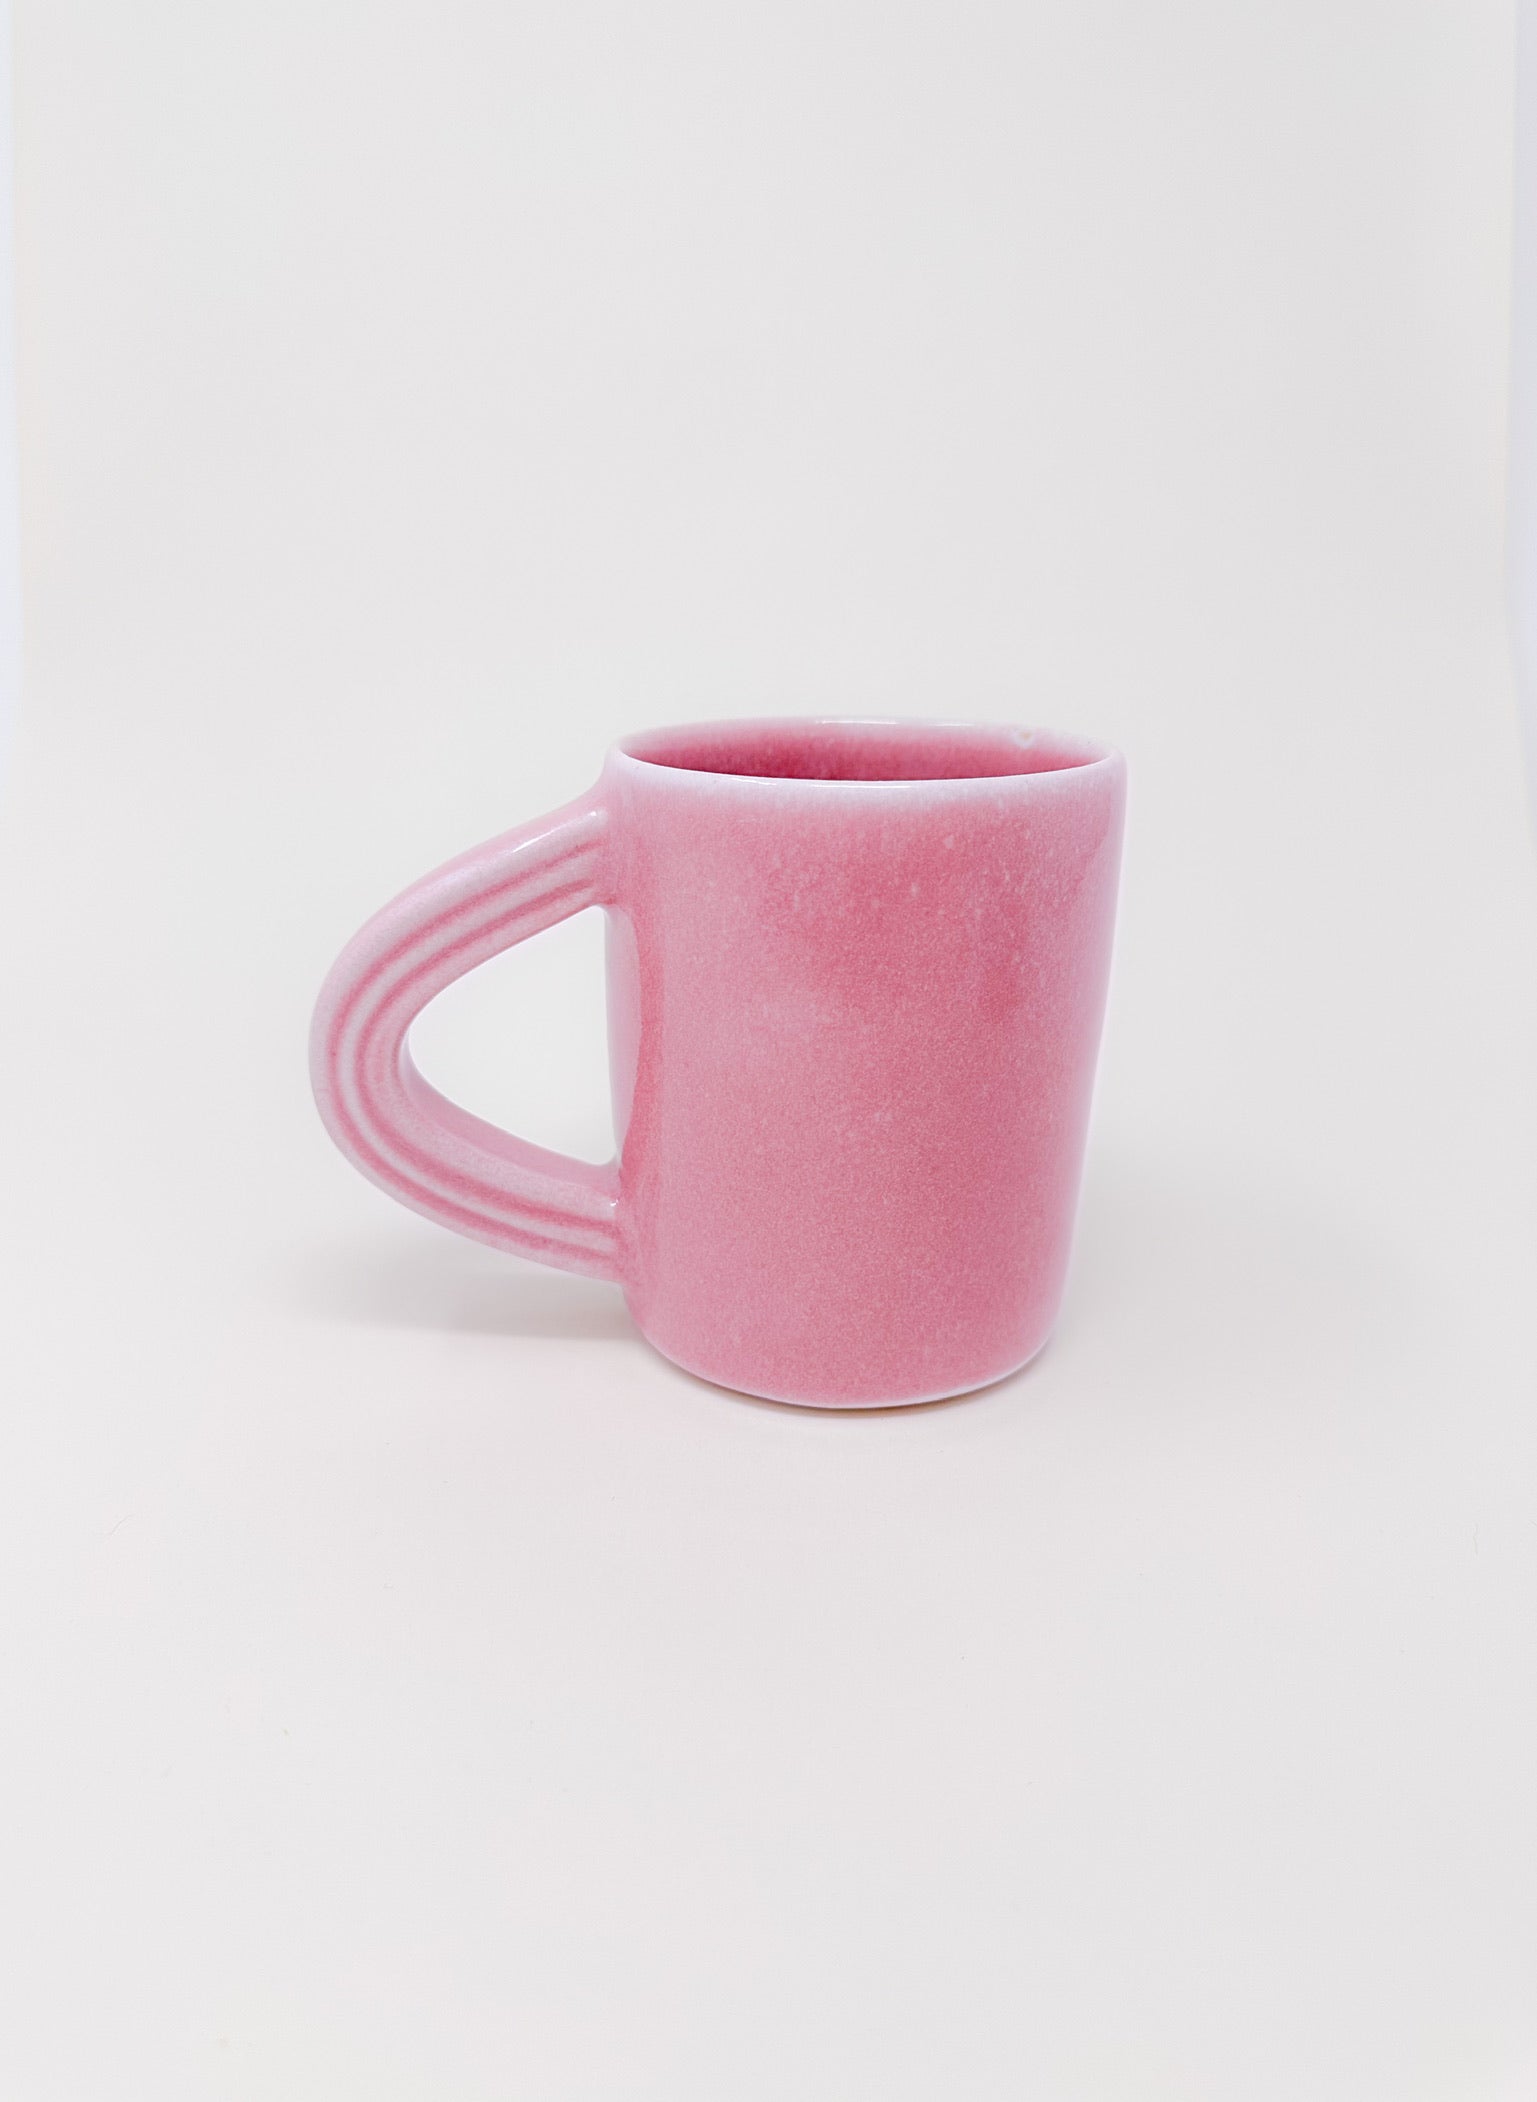 Be Kind Peach Rainbow Ceramic Sublimation Coffee Cup Mug